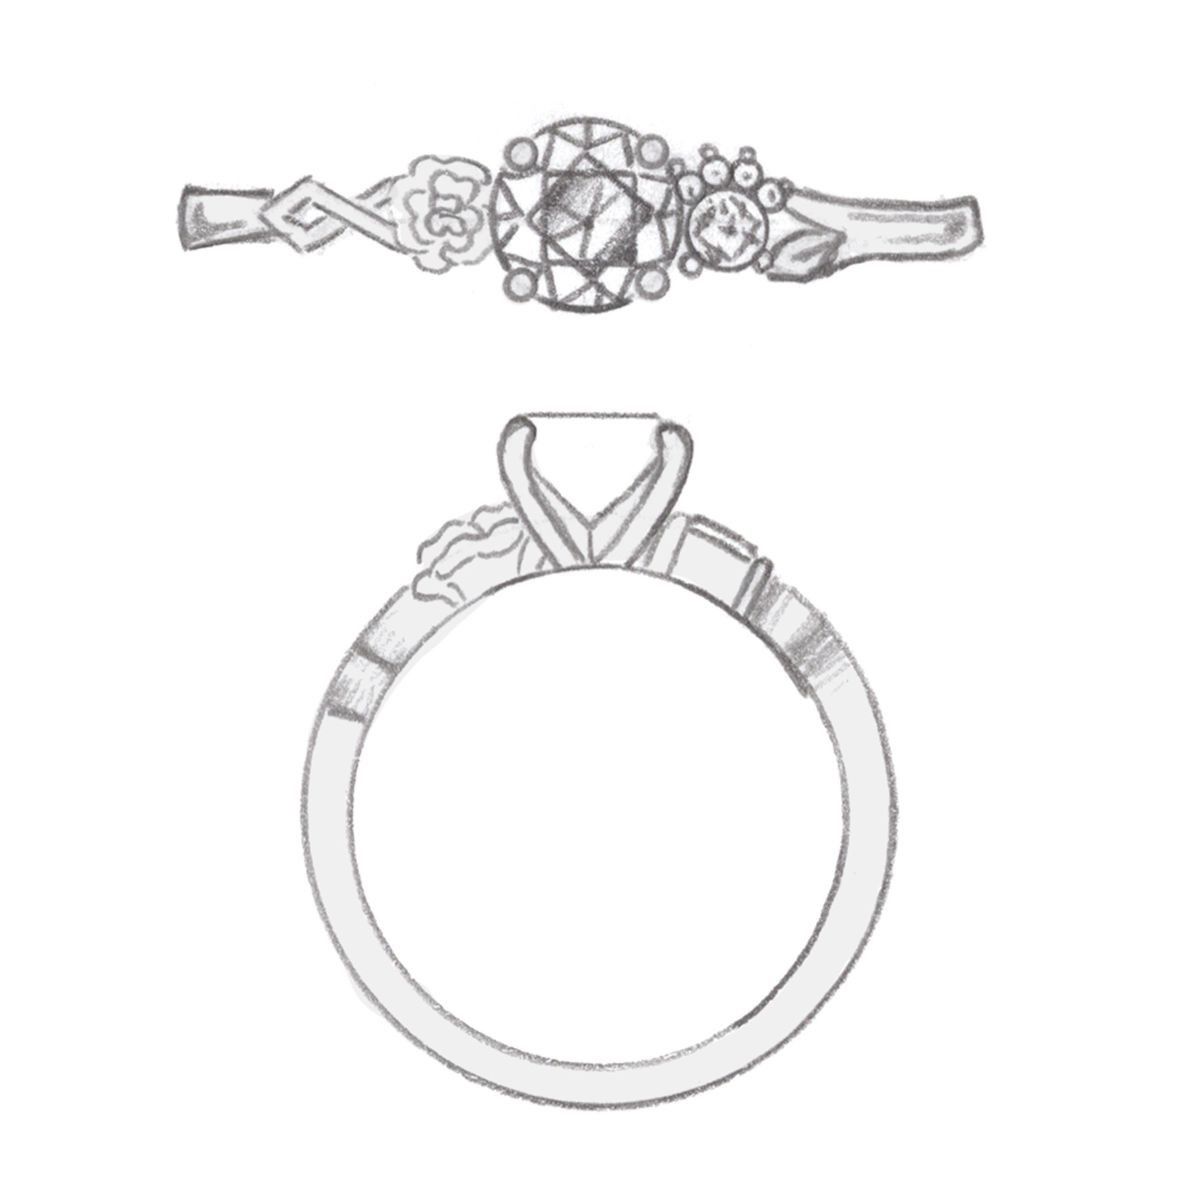 Rose engagement ring designs | CustomMade.com